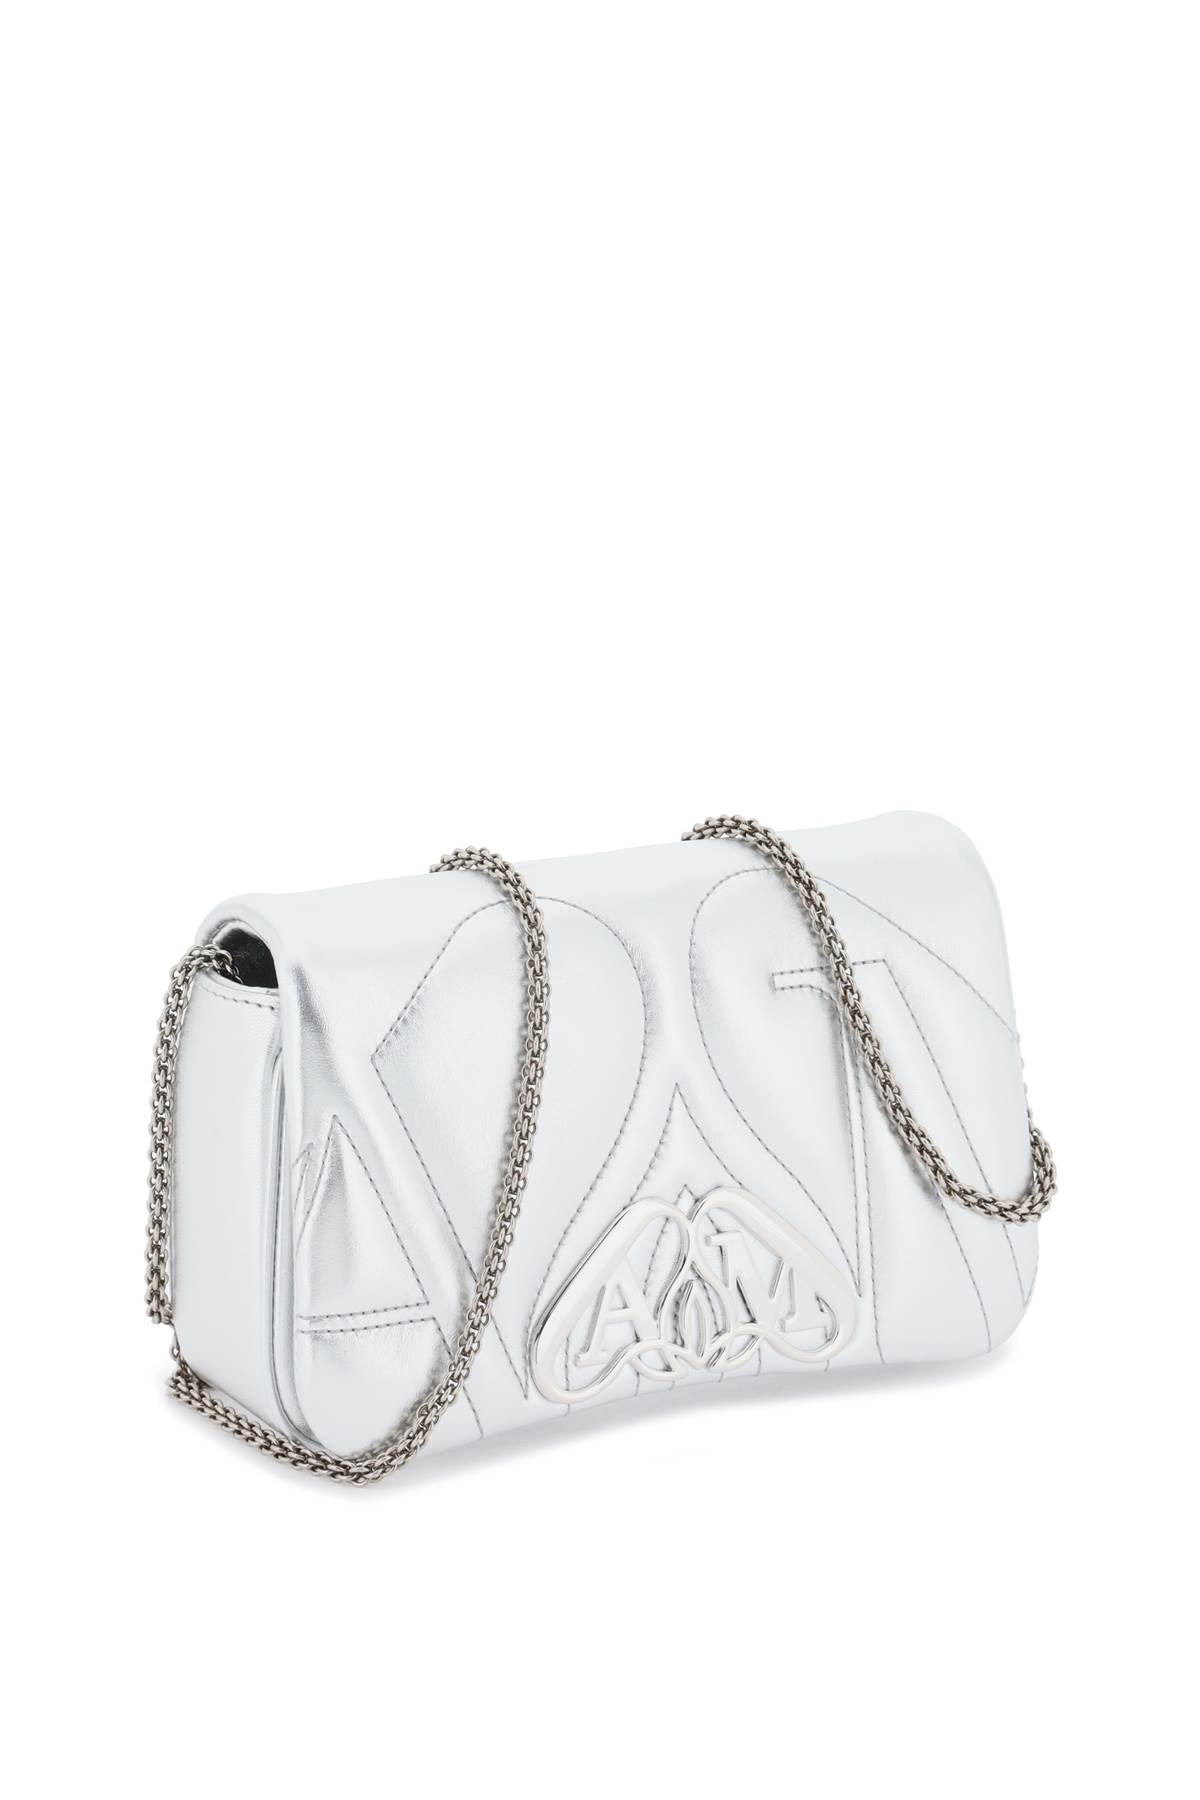 ALEXANDER MCQUEEN Silver Seal Mini Leather Crossbody Handbag with Detachable Chain - Gray